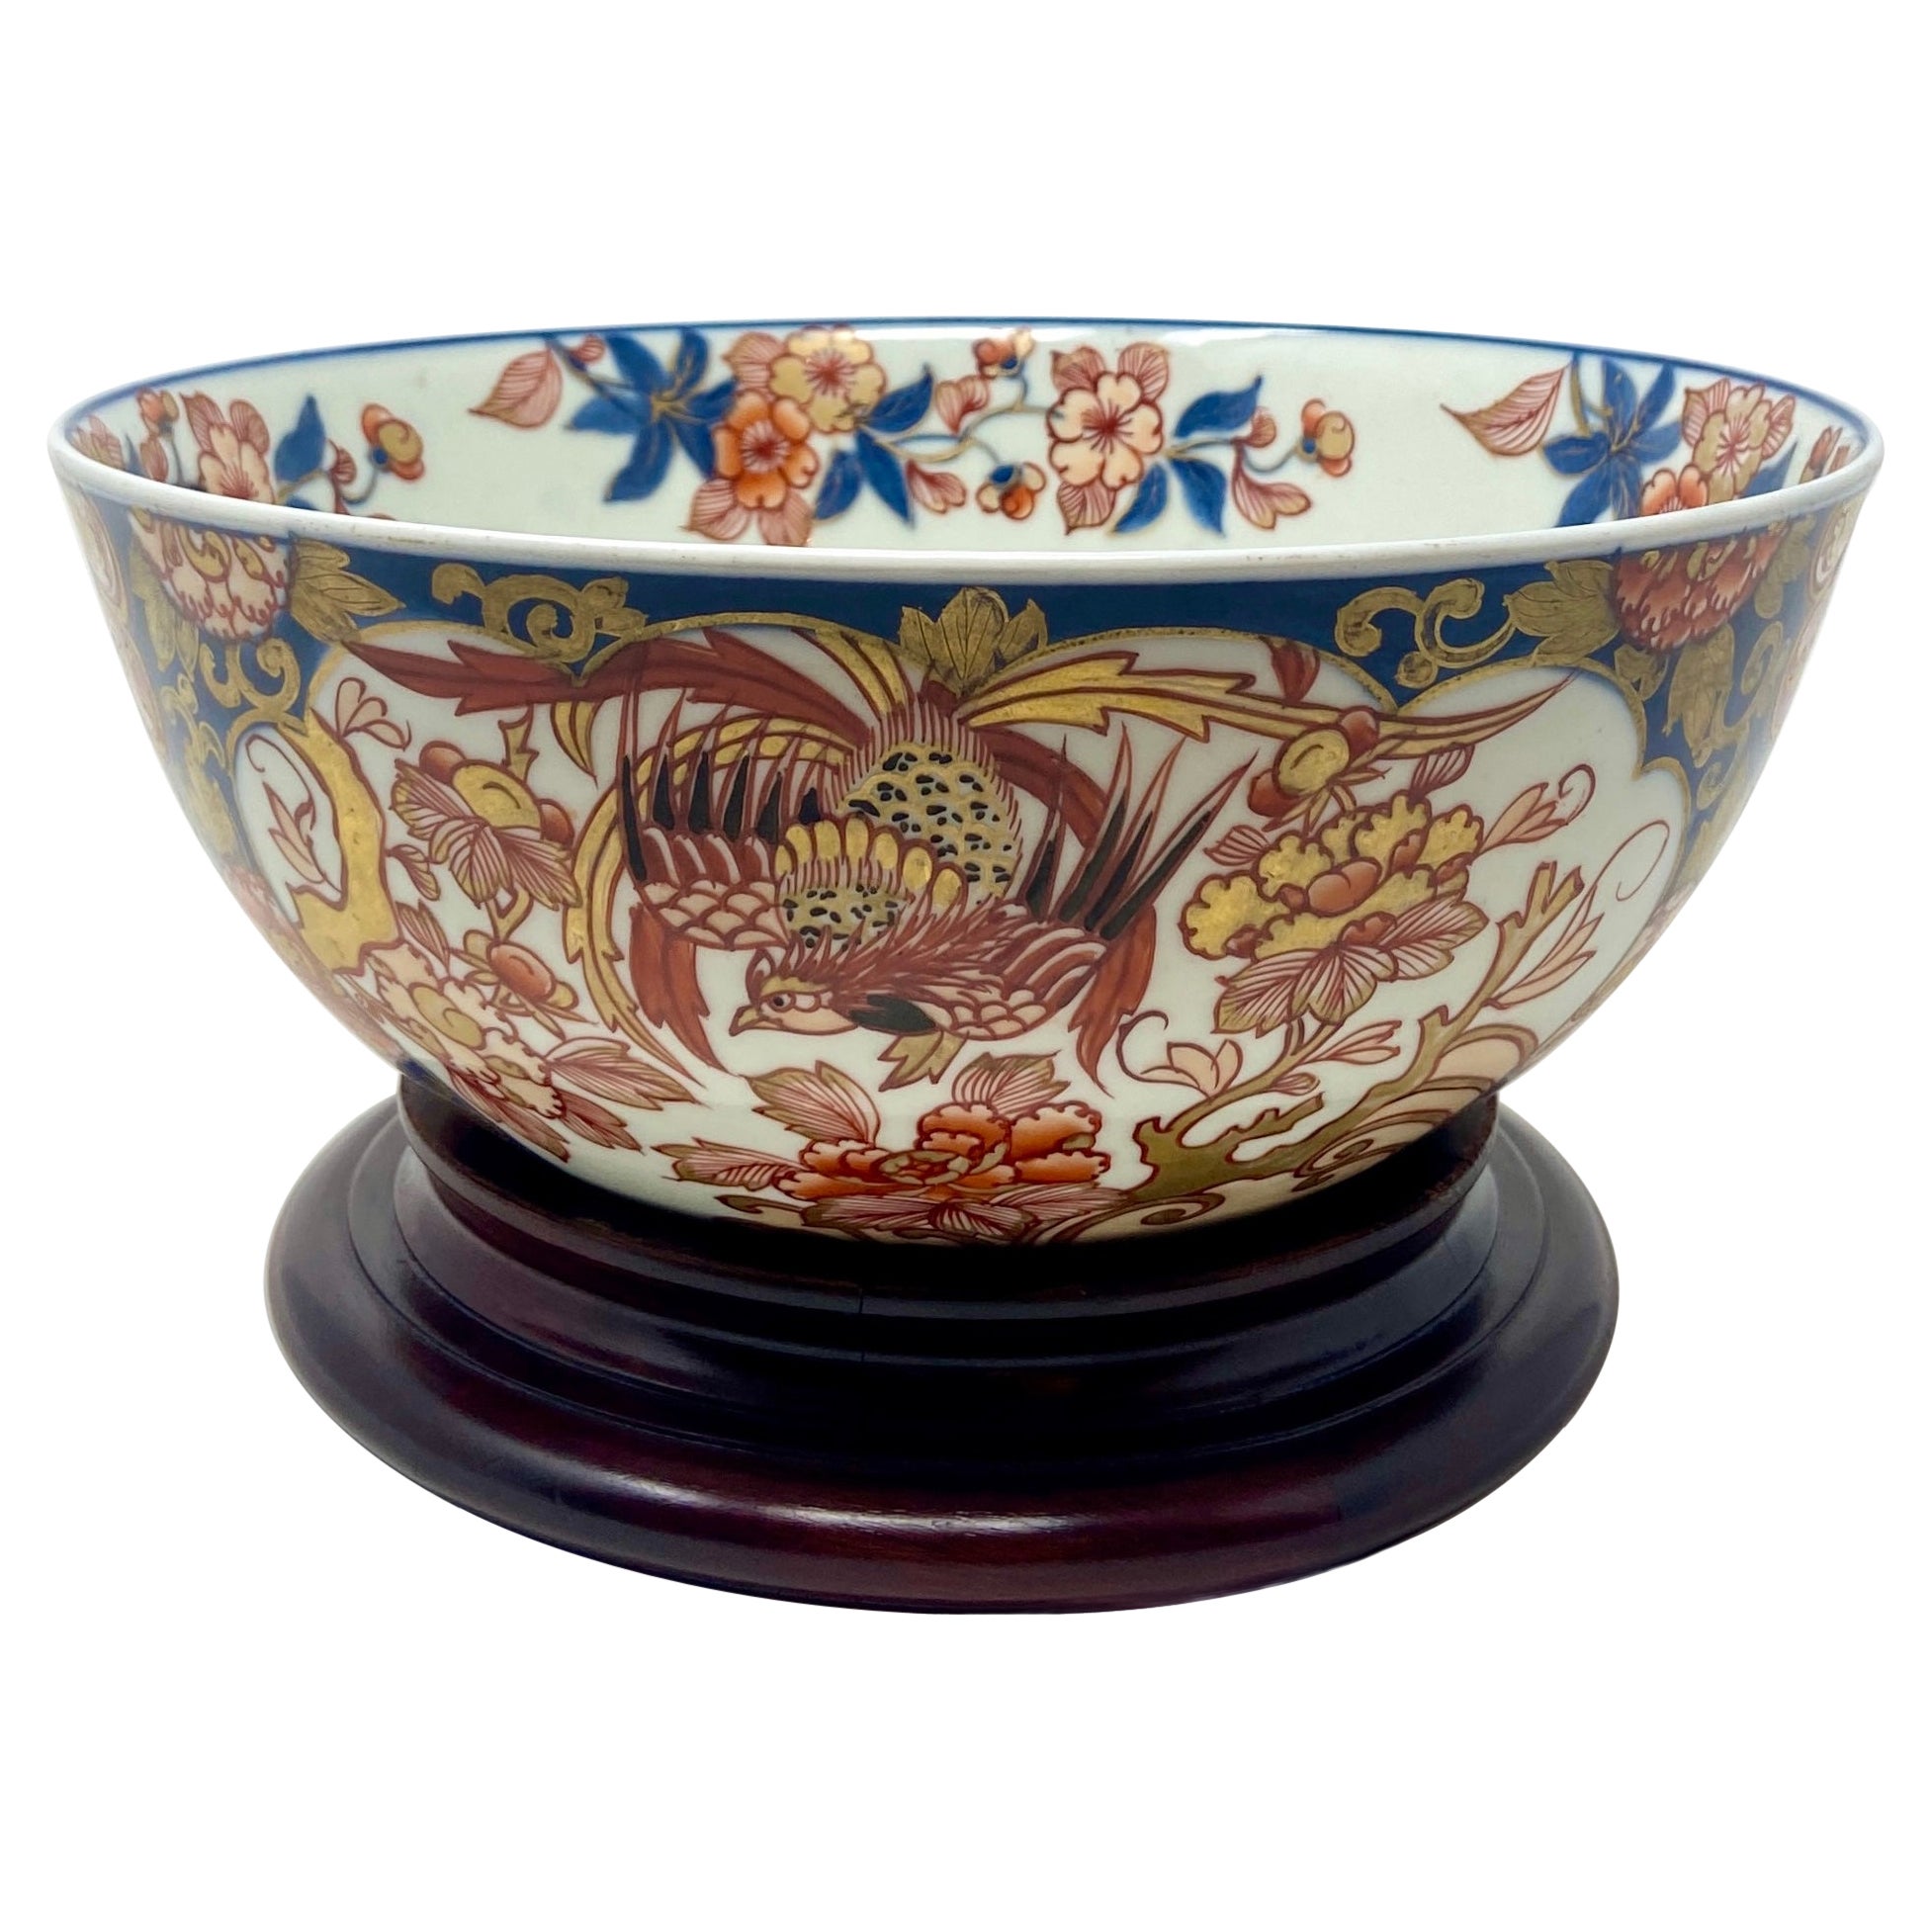 Antique Japanese Imari Porcelain Bowl on Teakwood Stand, Circa 1900